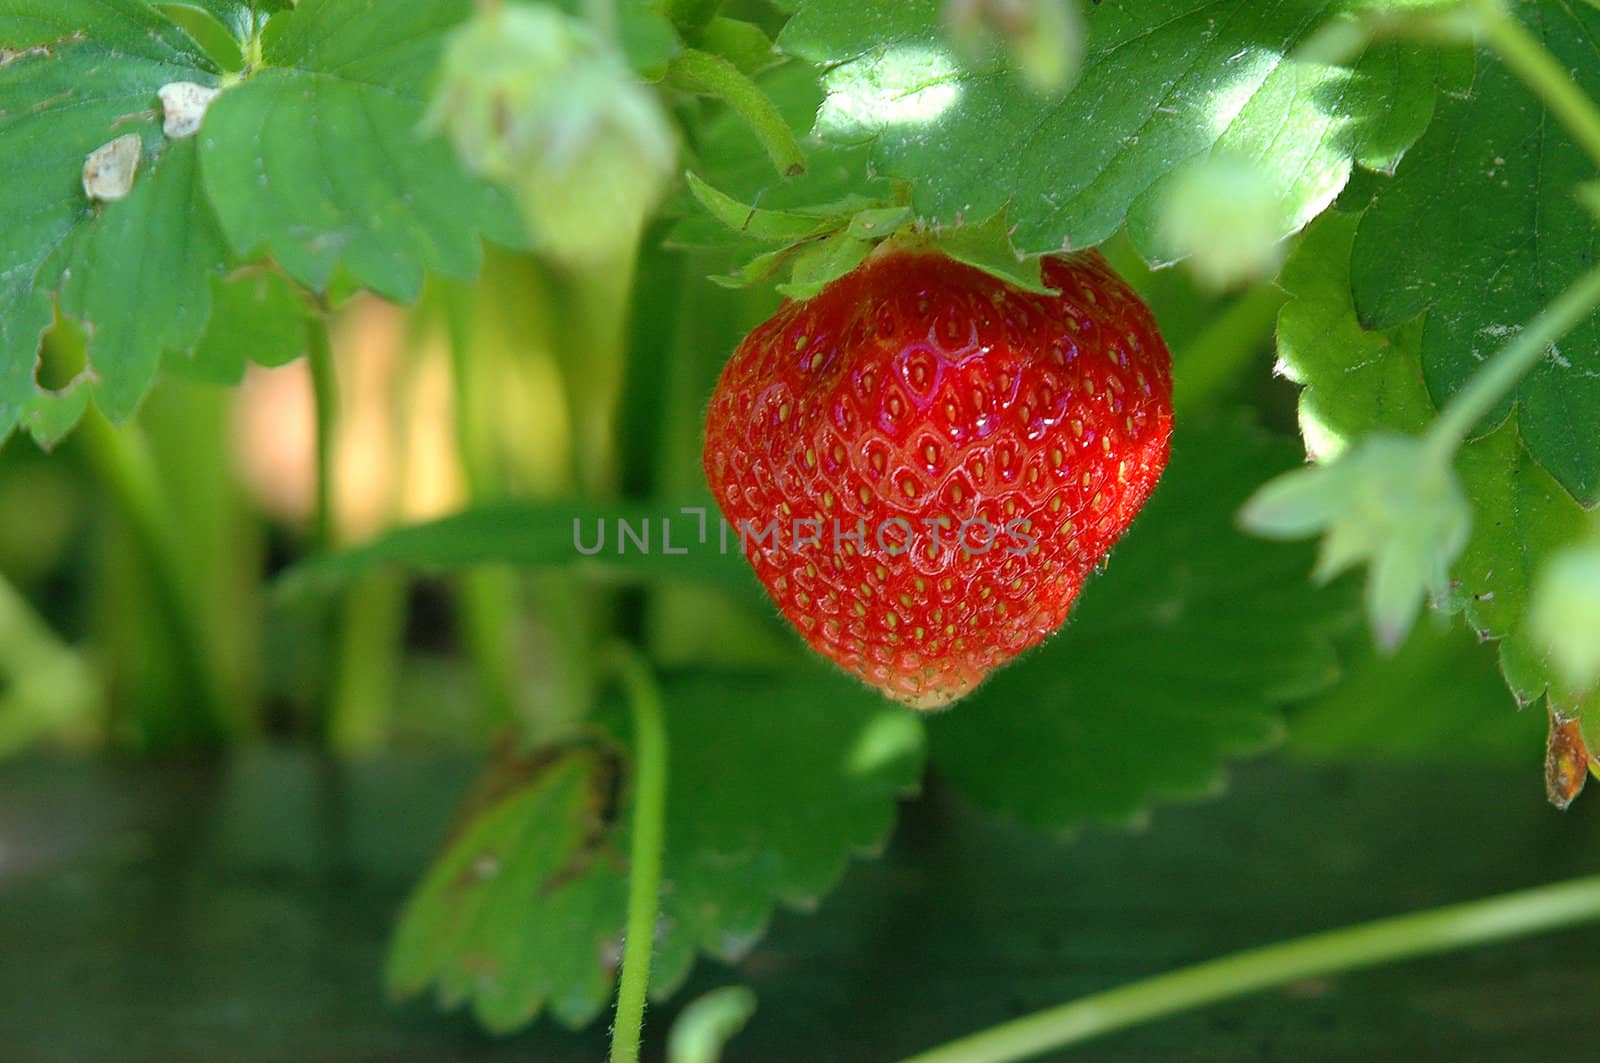 Tasty strawberries from the garden by kekanger